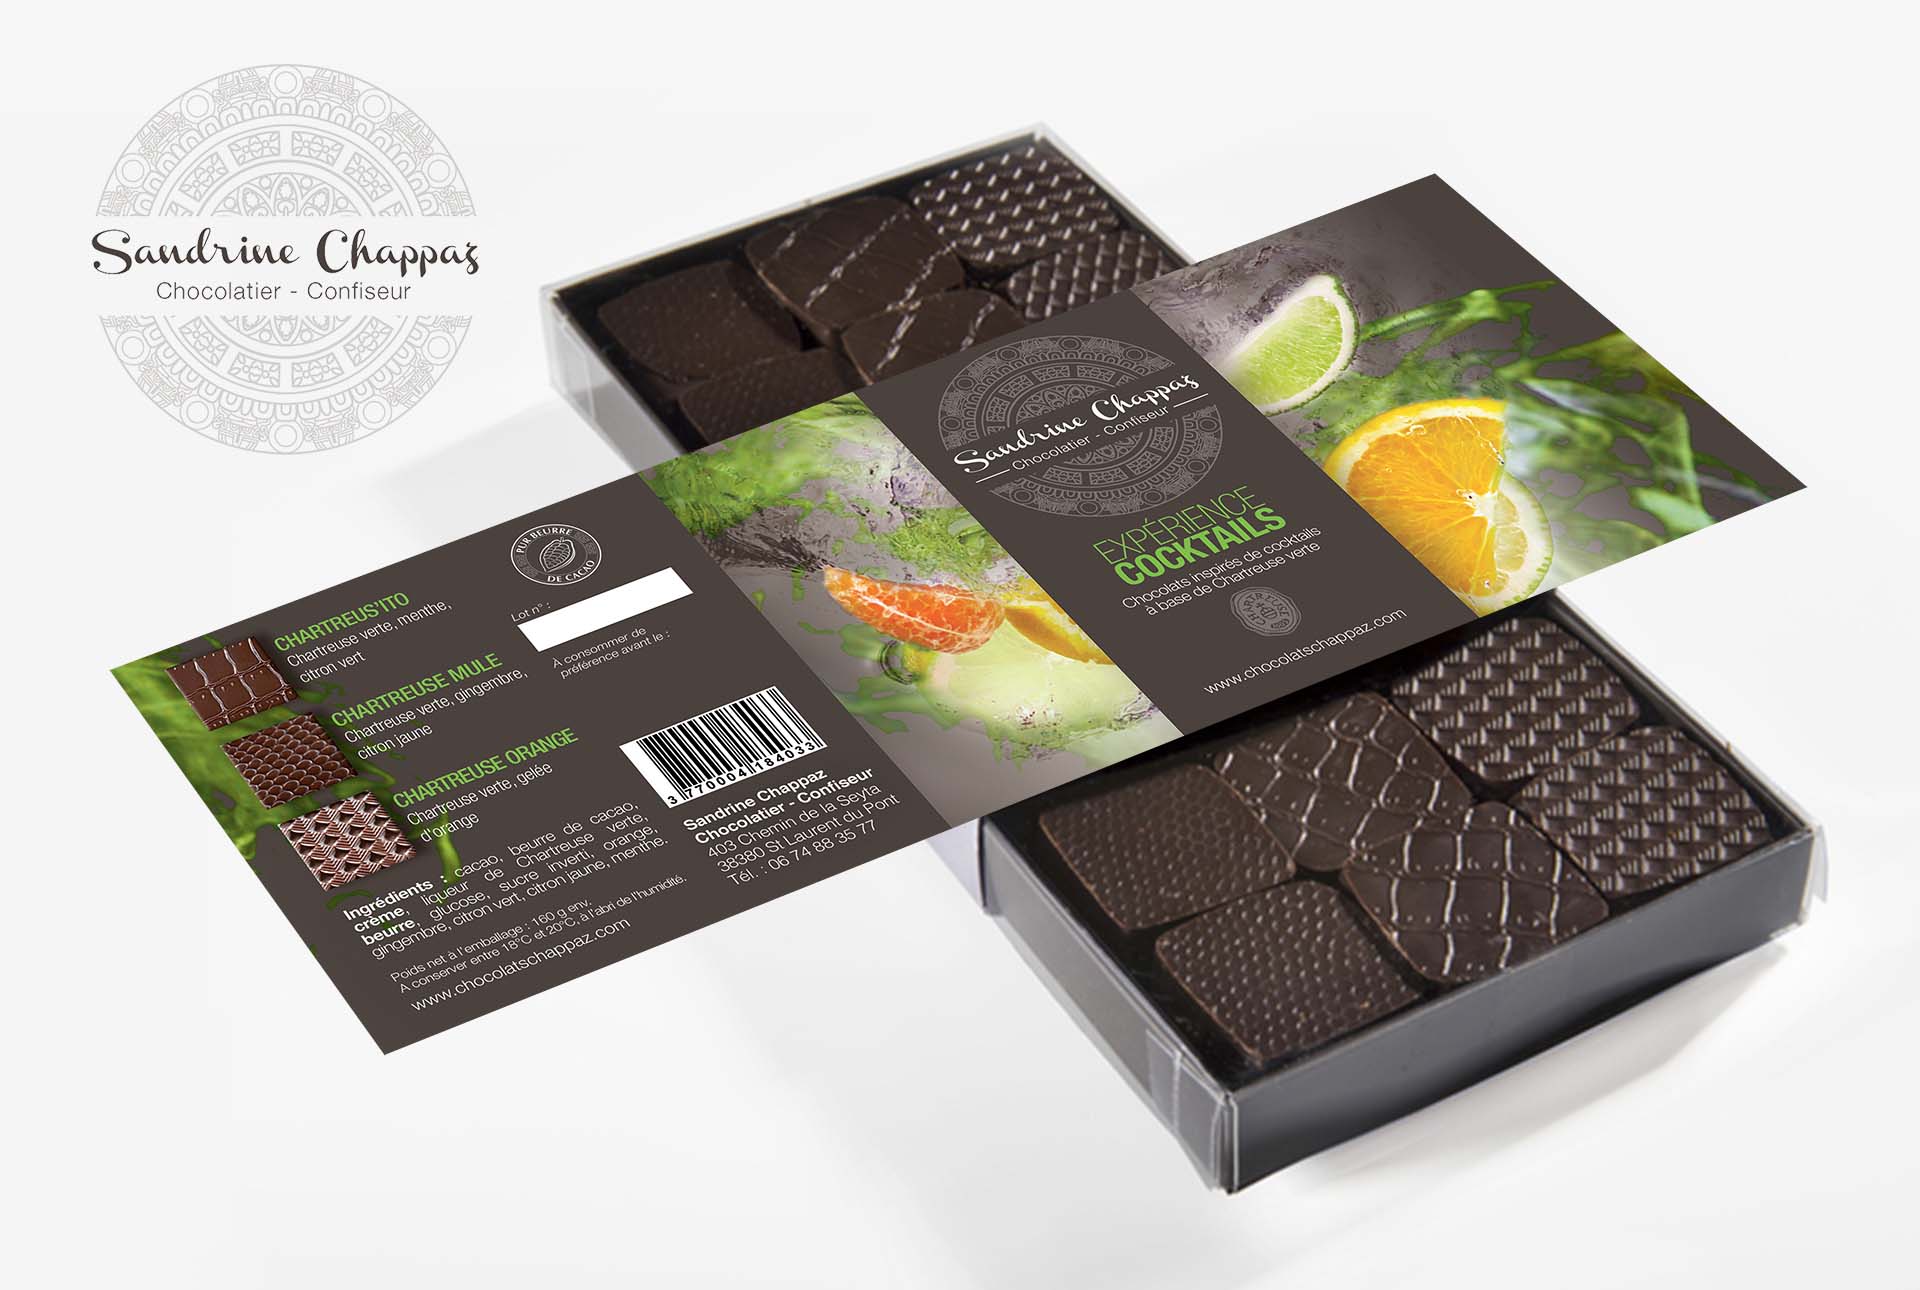 Chappaz creation etiquette emballage alimentaire graphiste grenoble